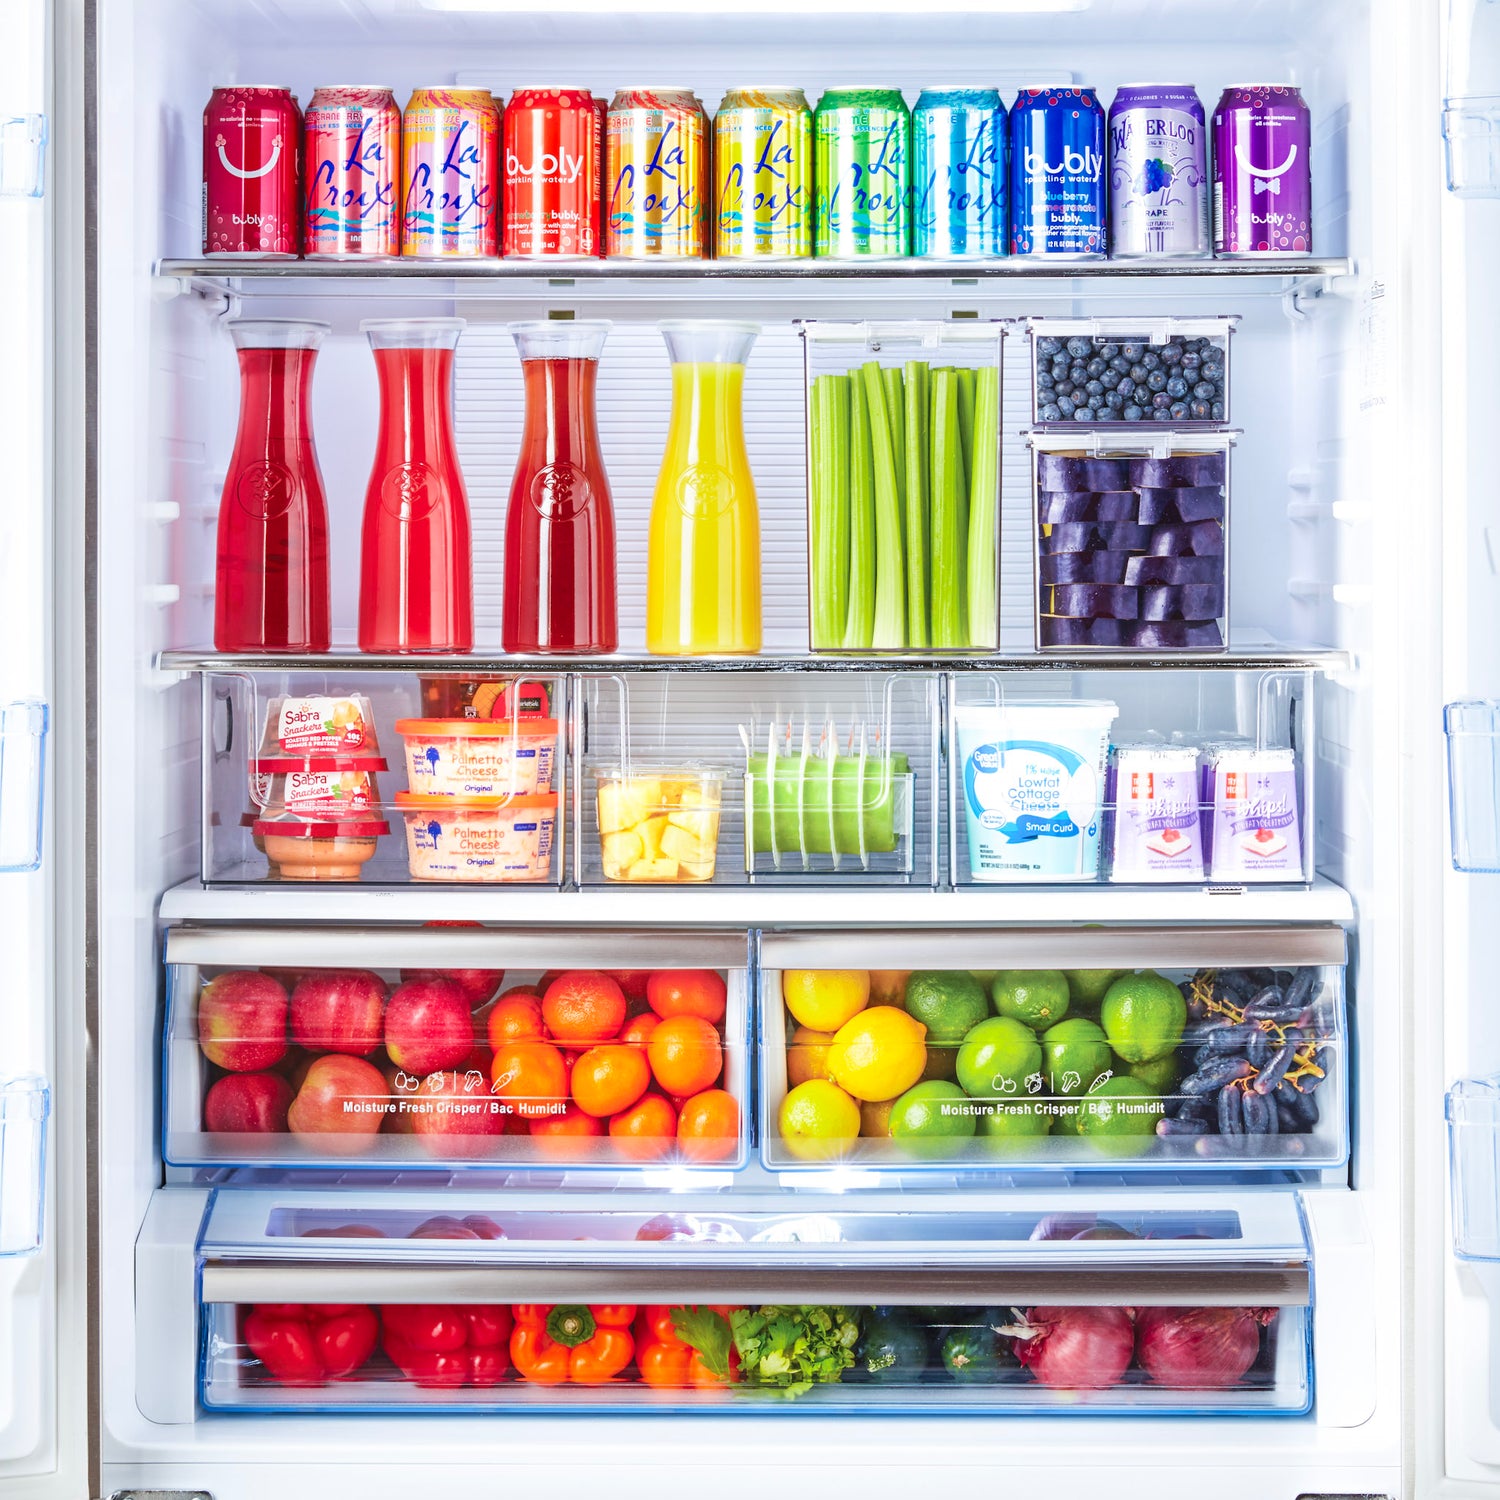 How to organize your fridge for the coronavirus pandemic